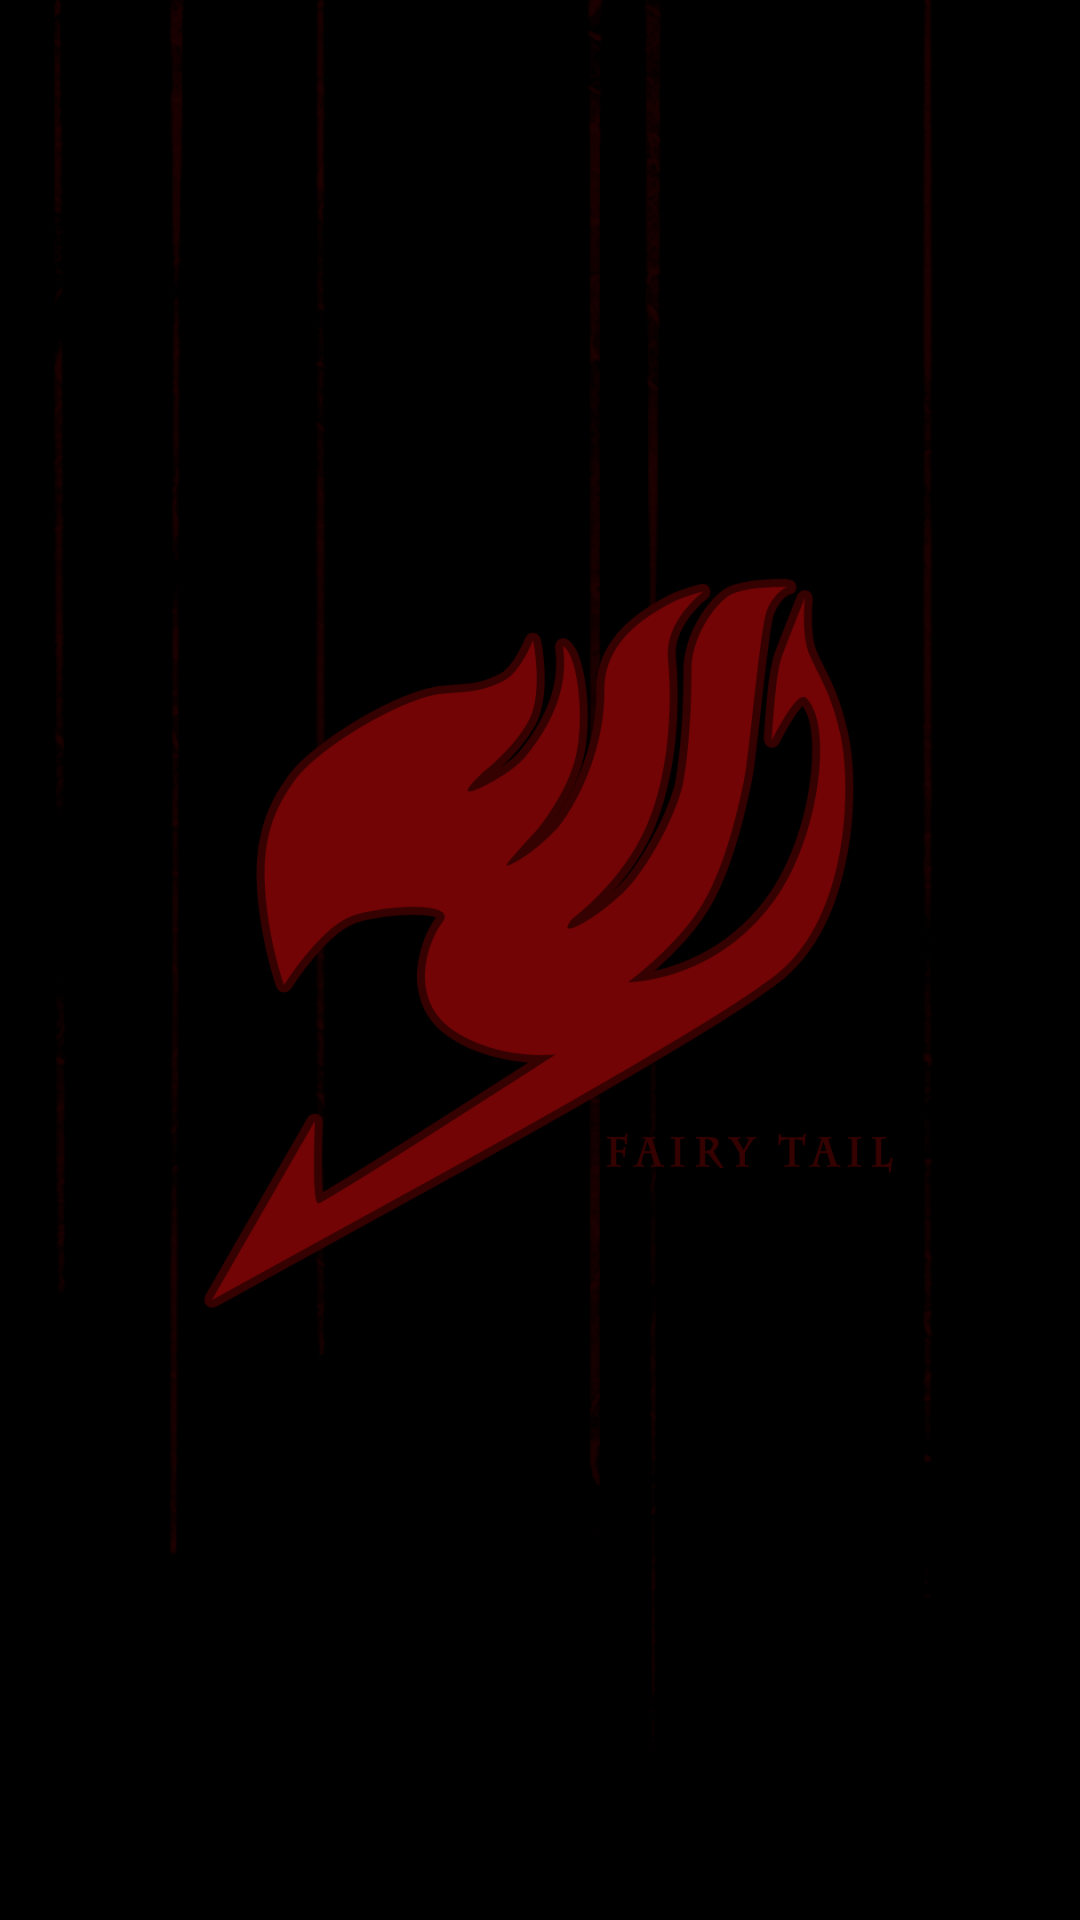 fairy tail guild symbol wallpaper